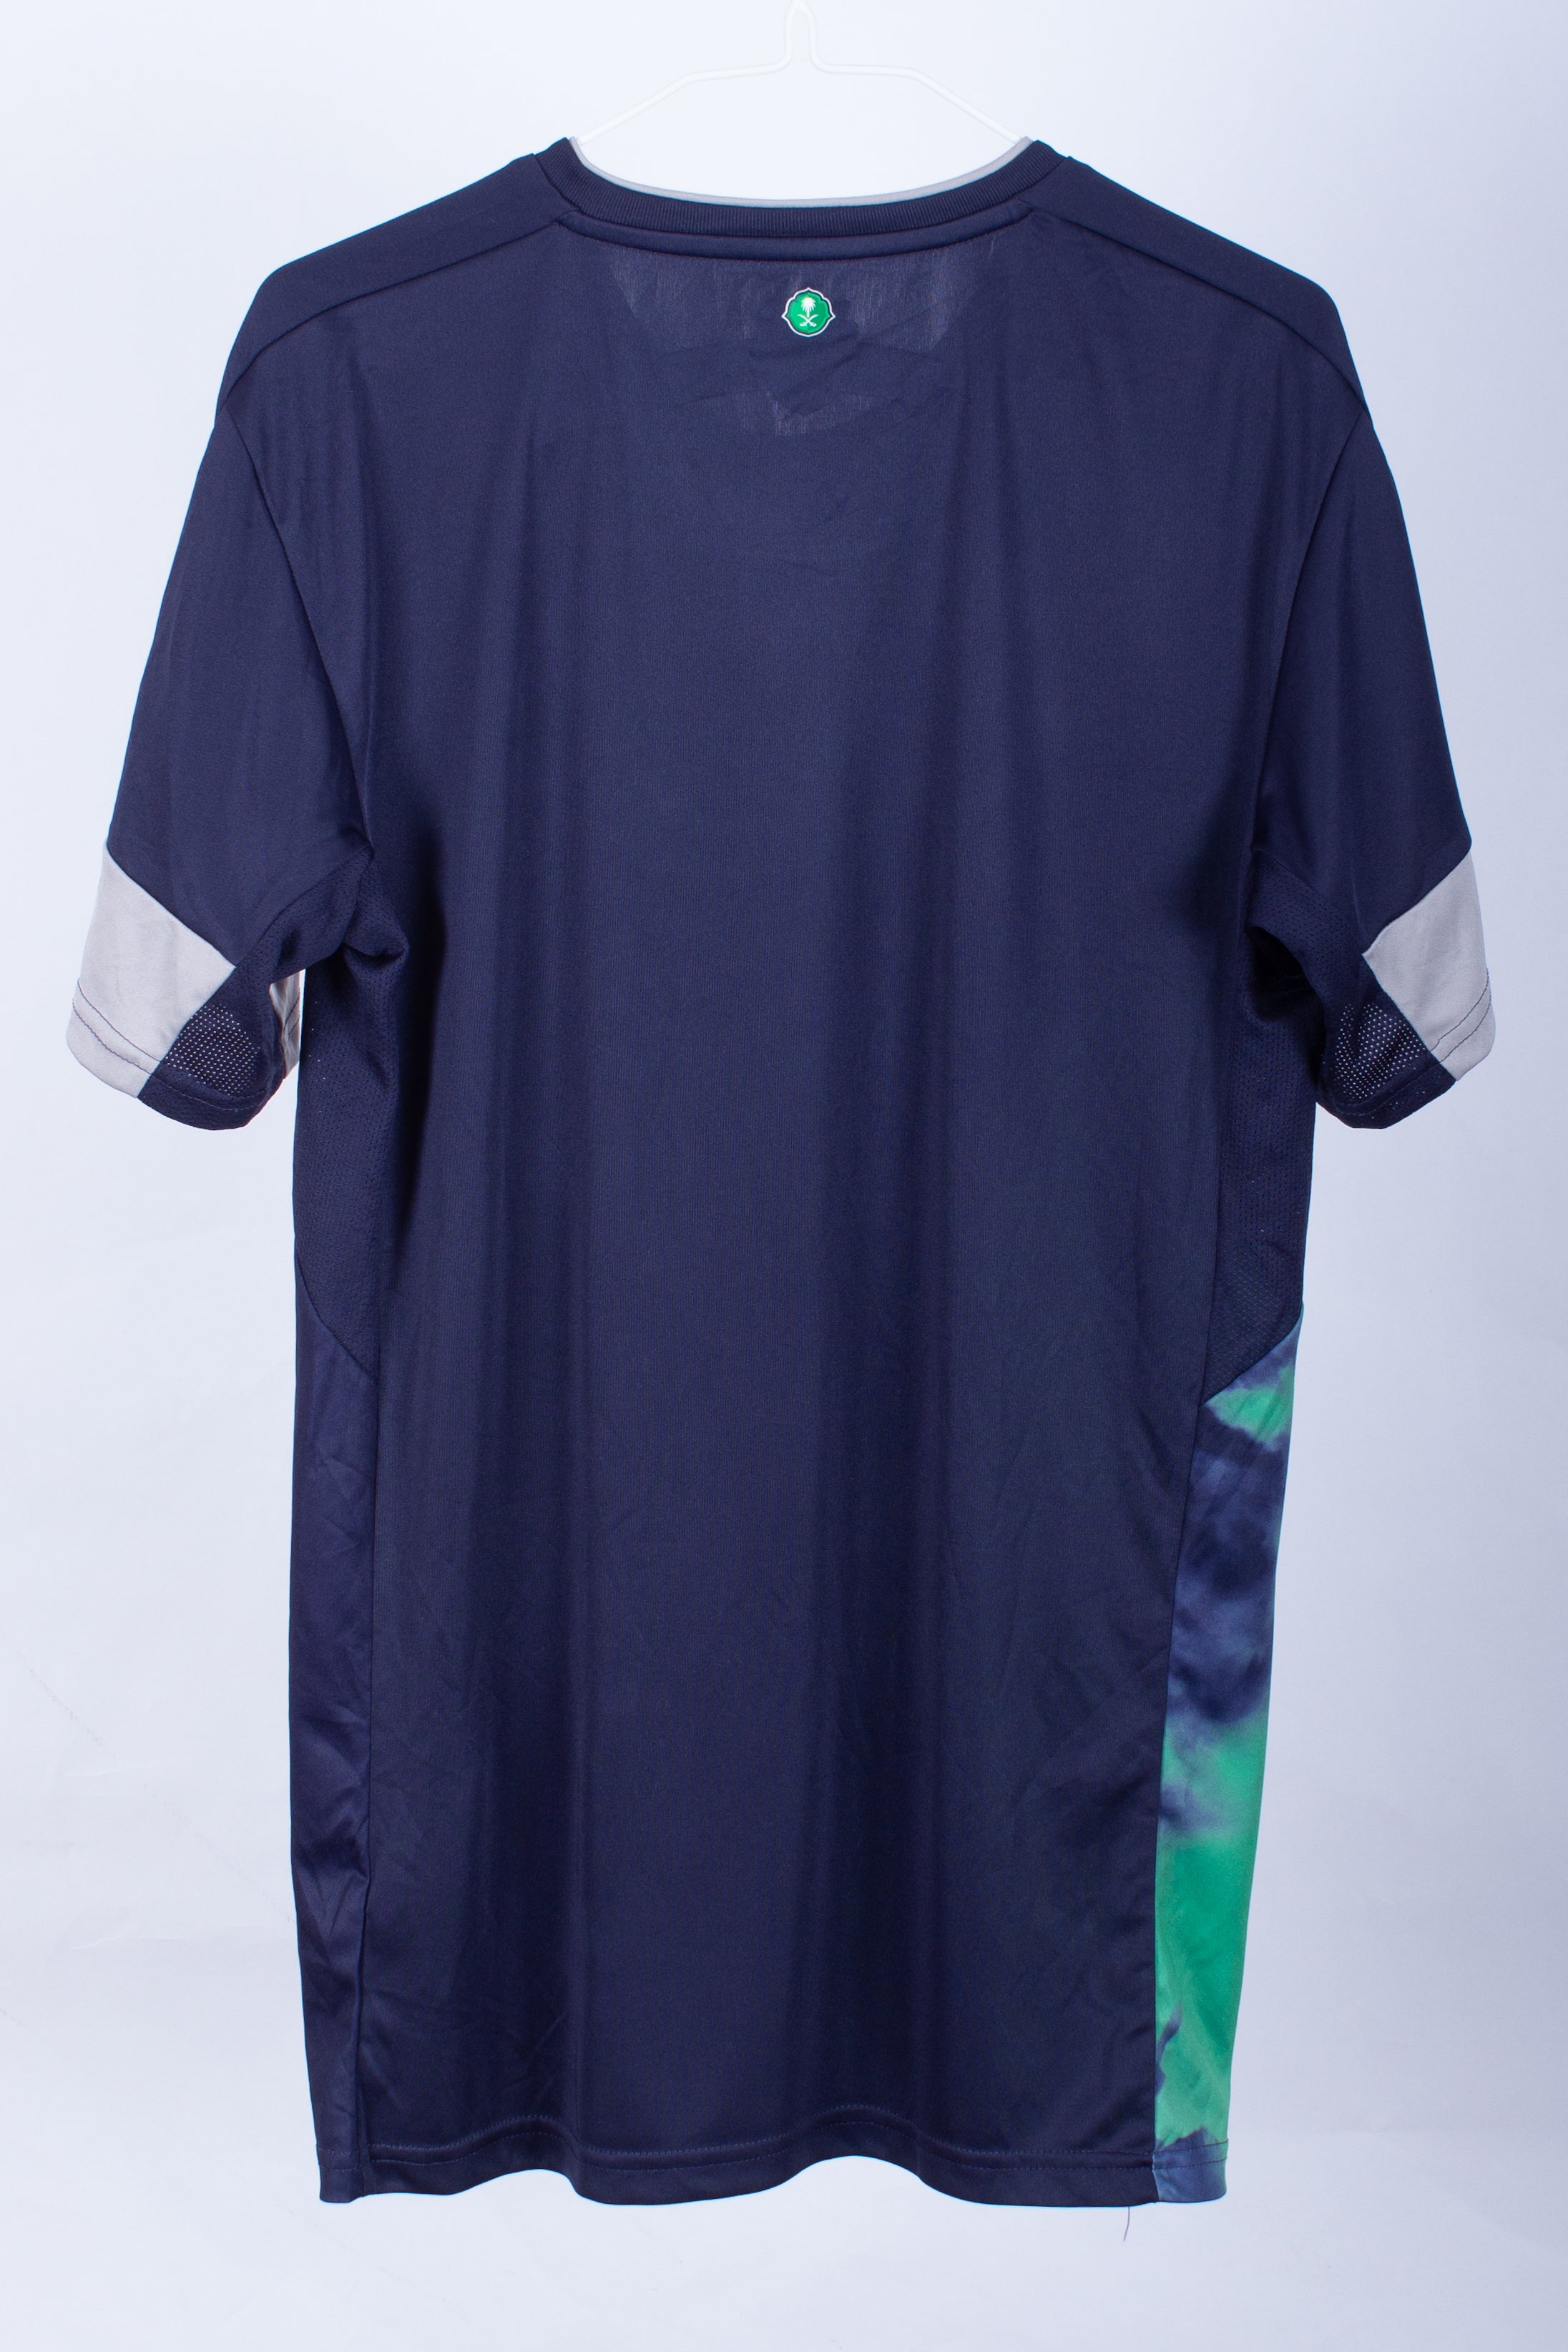 Al-Ahli Football Shirt, Saudi Team Football Shirts. That Vintage Football Shirt